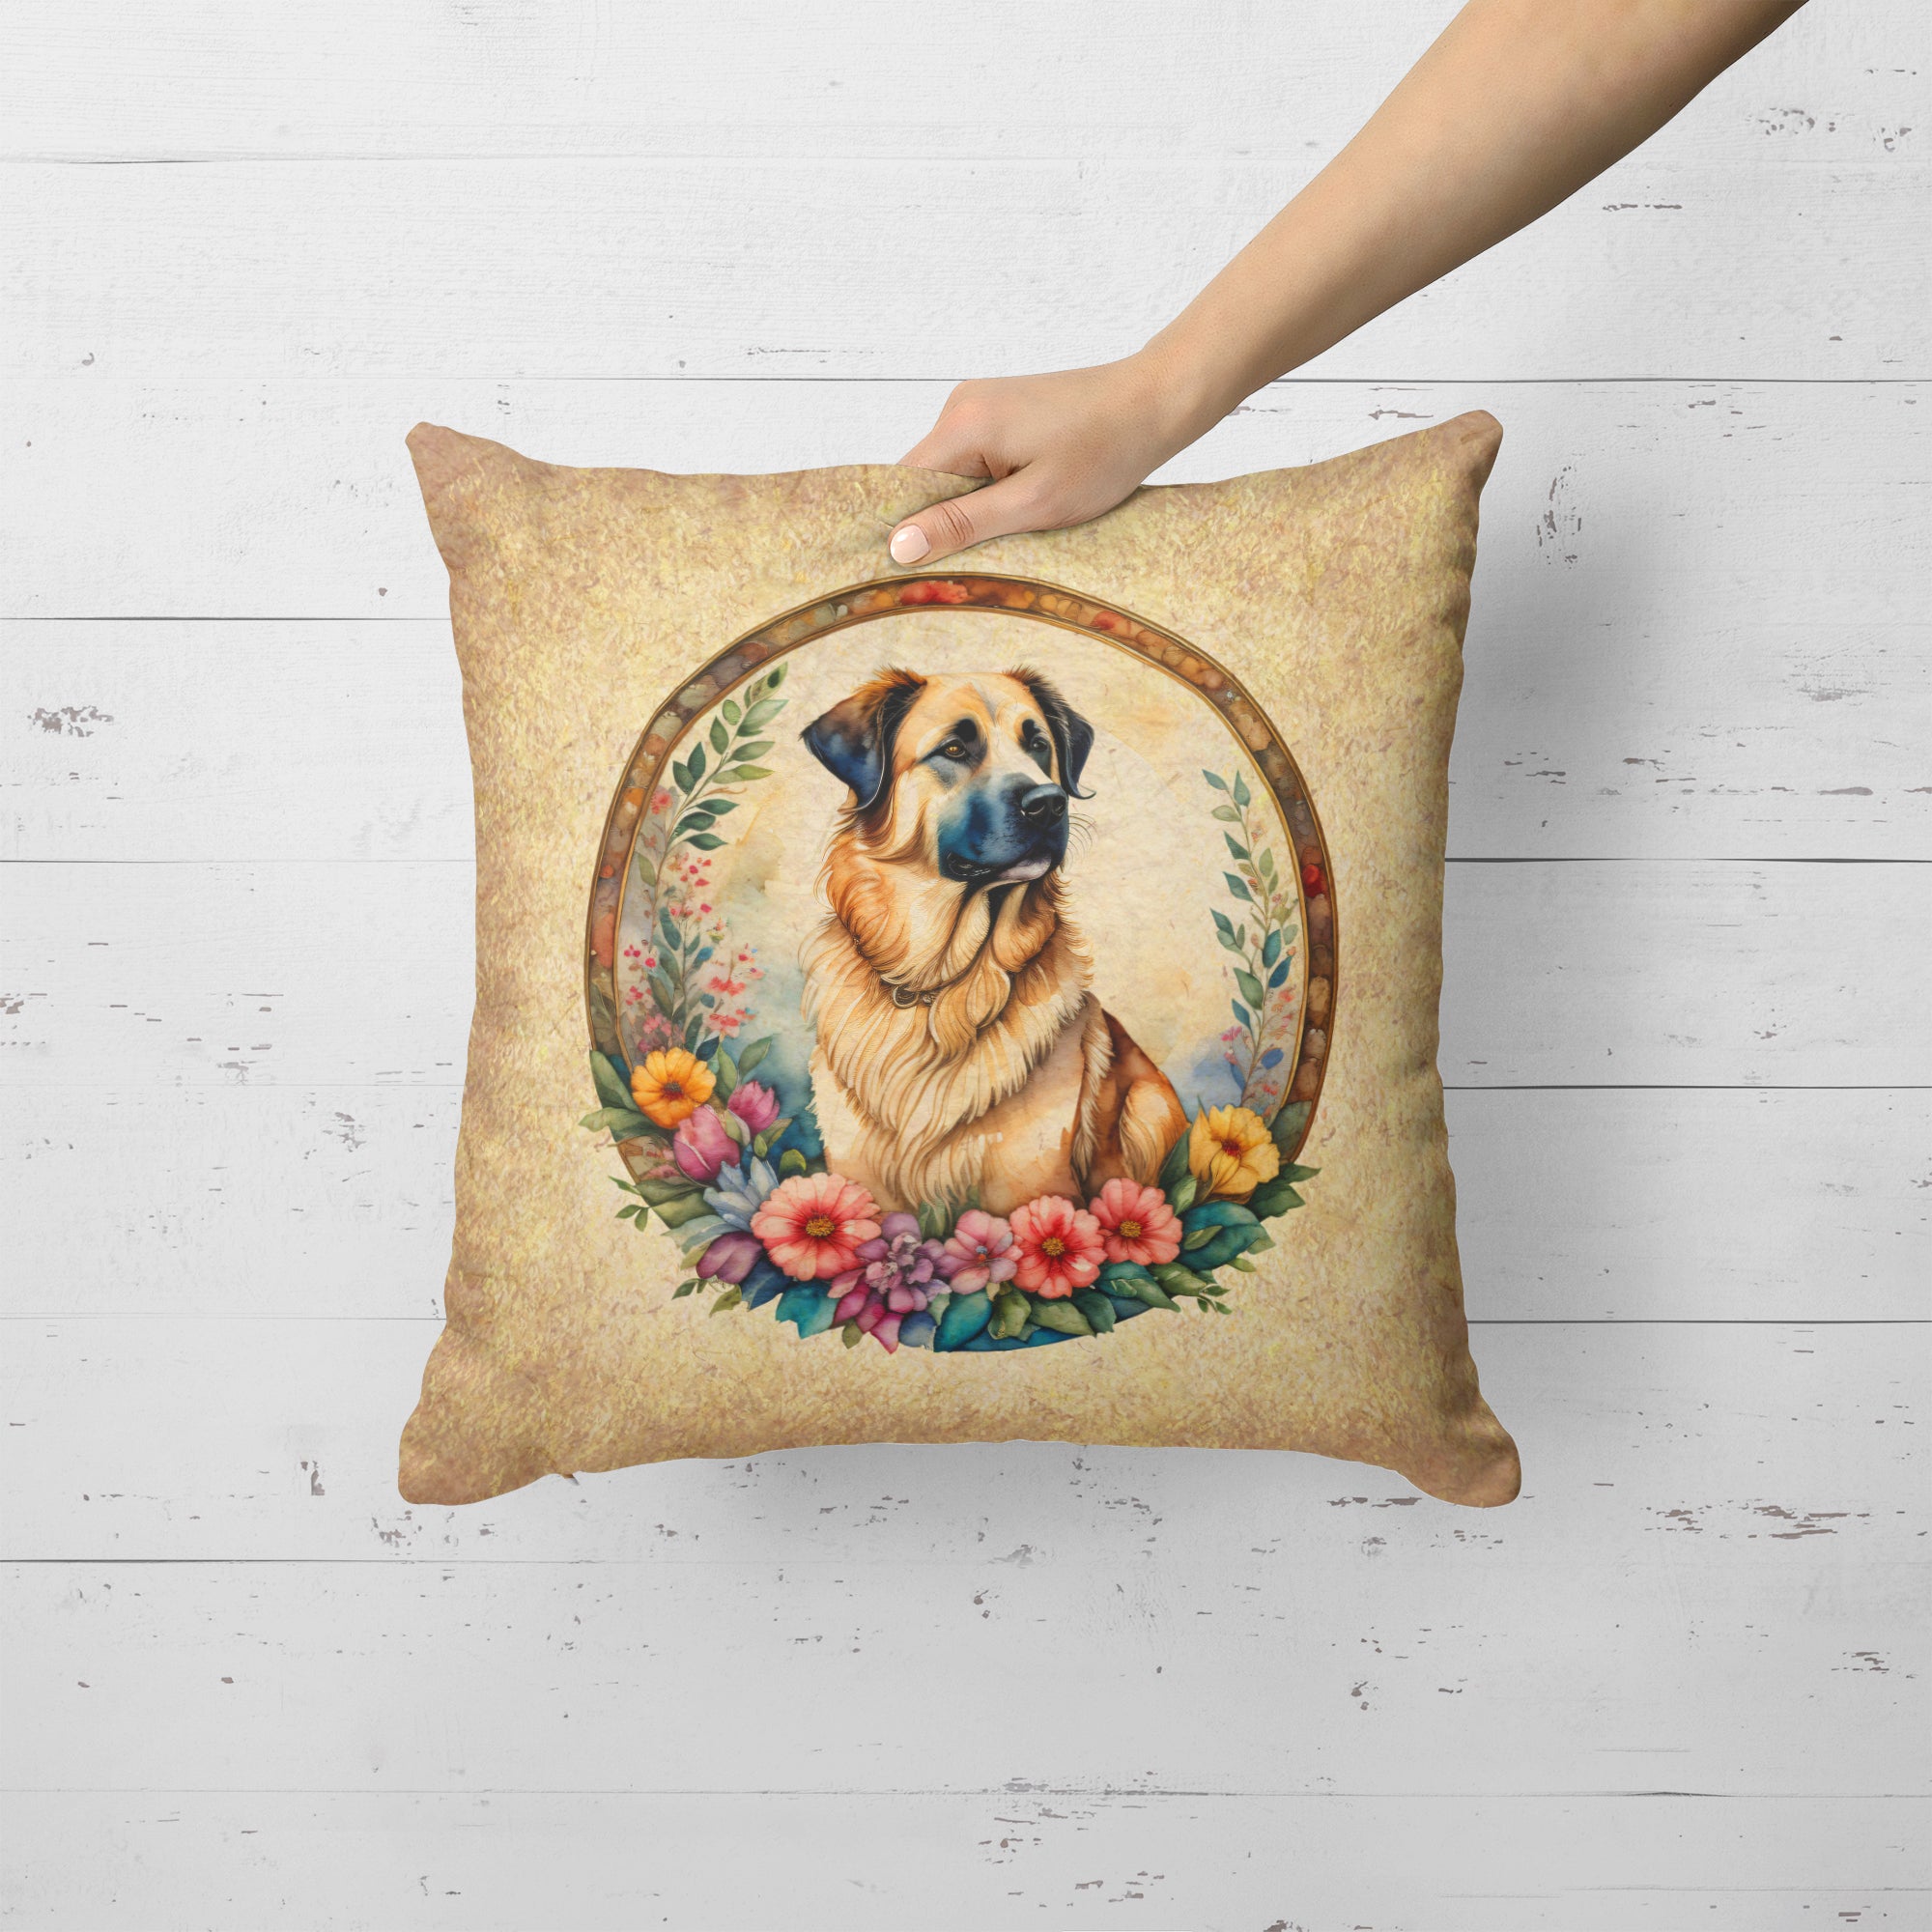 Buy this Anatolian Shepherd Dog and Flowers Fabric Decorative Pillow